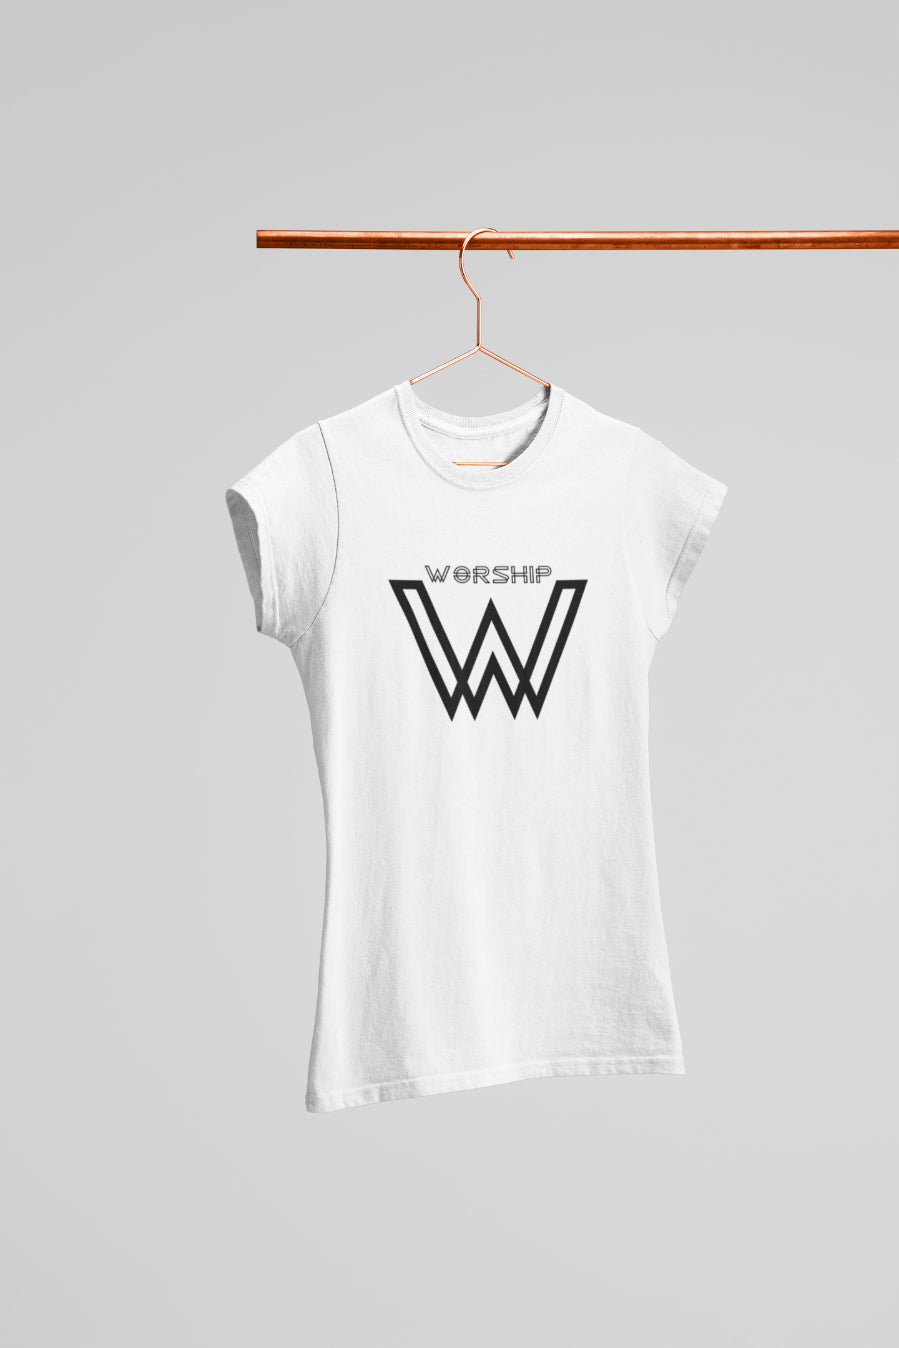 Camiseta Worship 1 Feminina